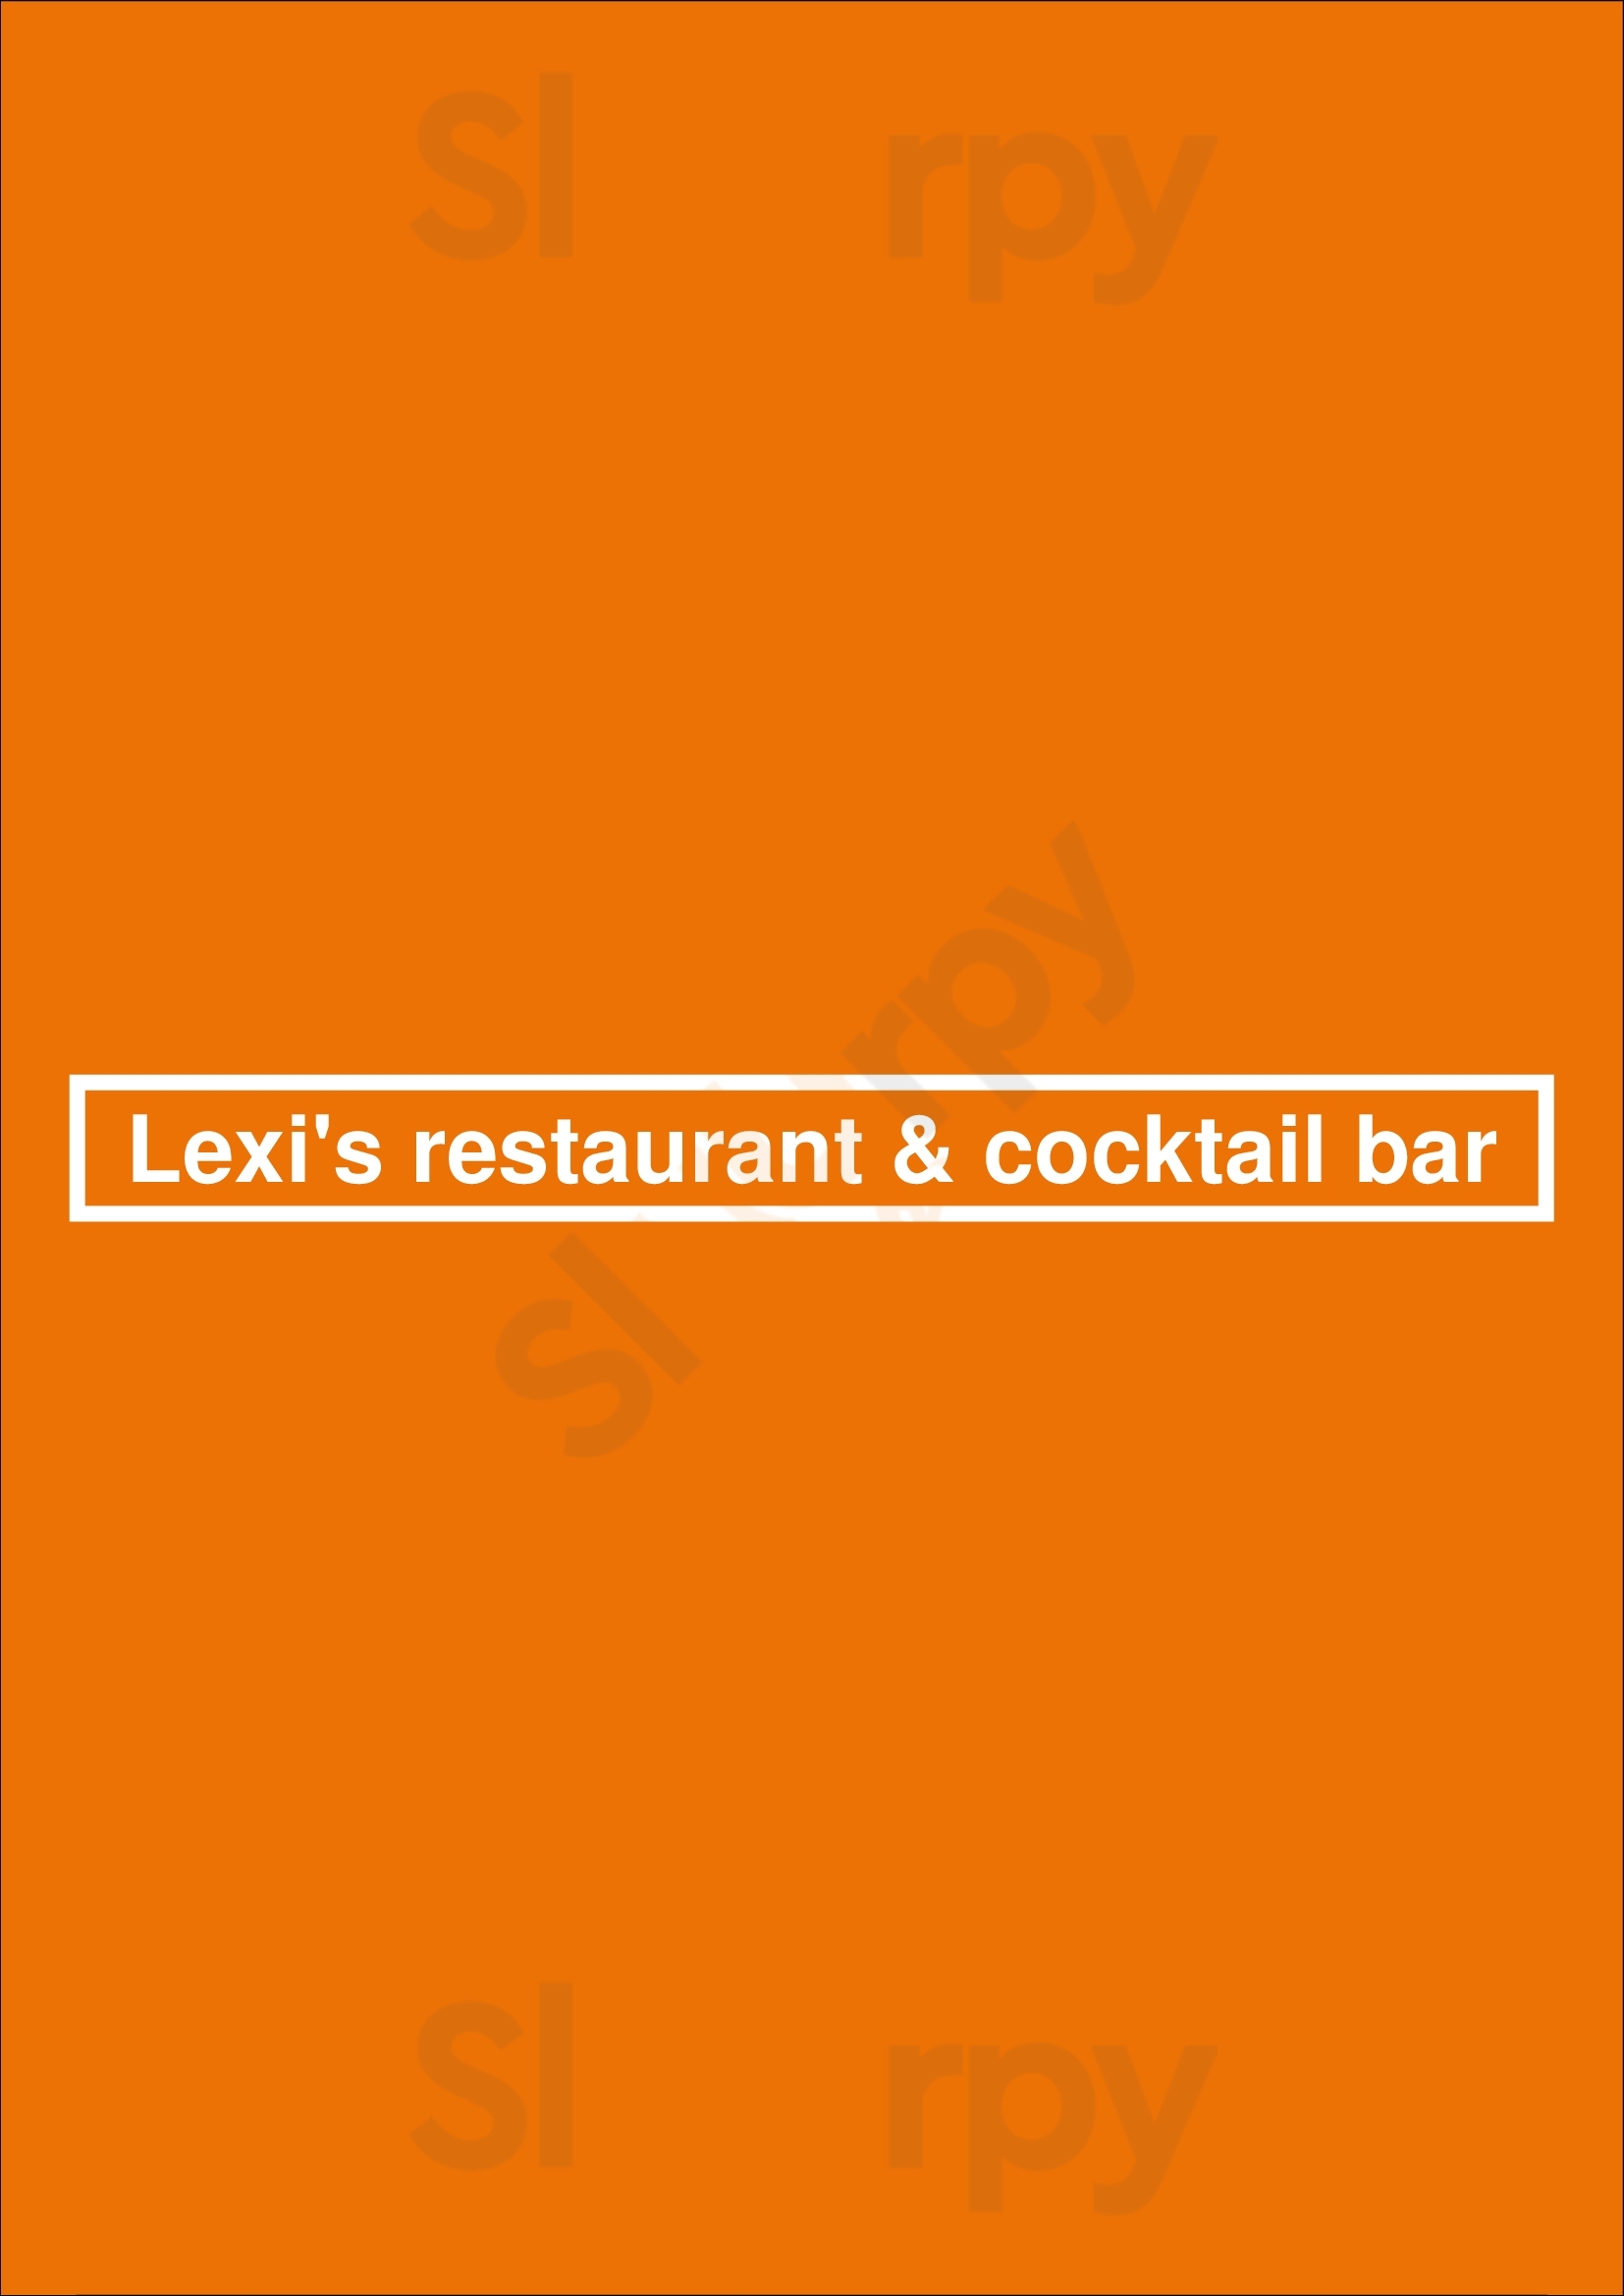 Lexi's Restaurant & Cocktail Bar Barcelona Menu - 1